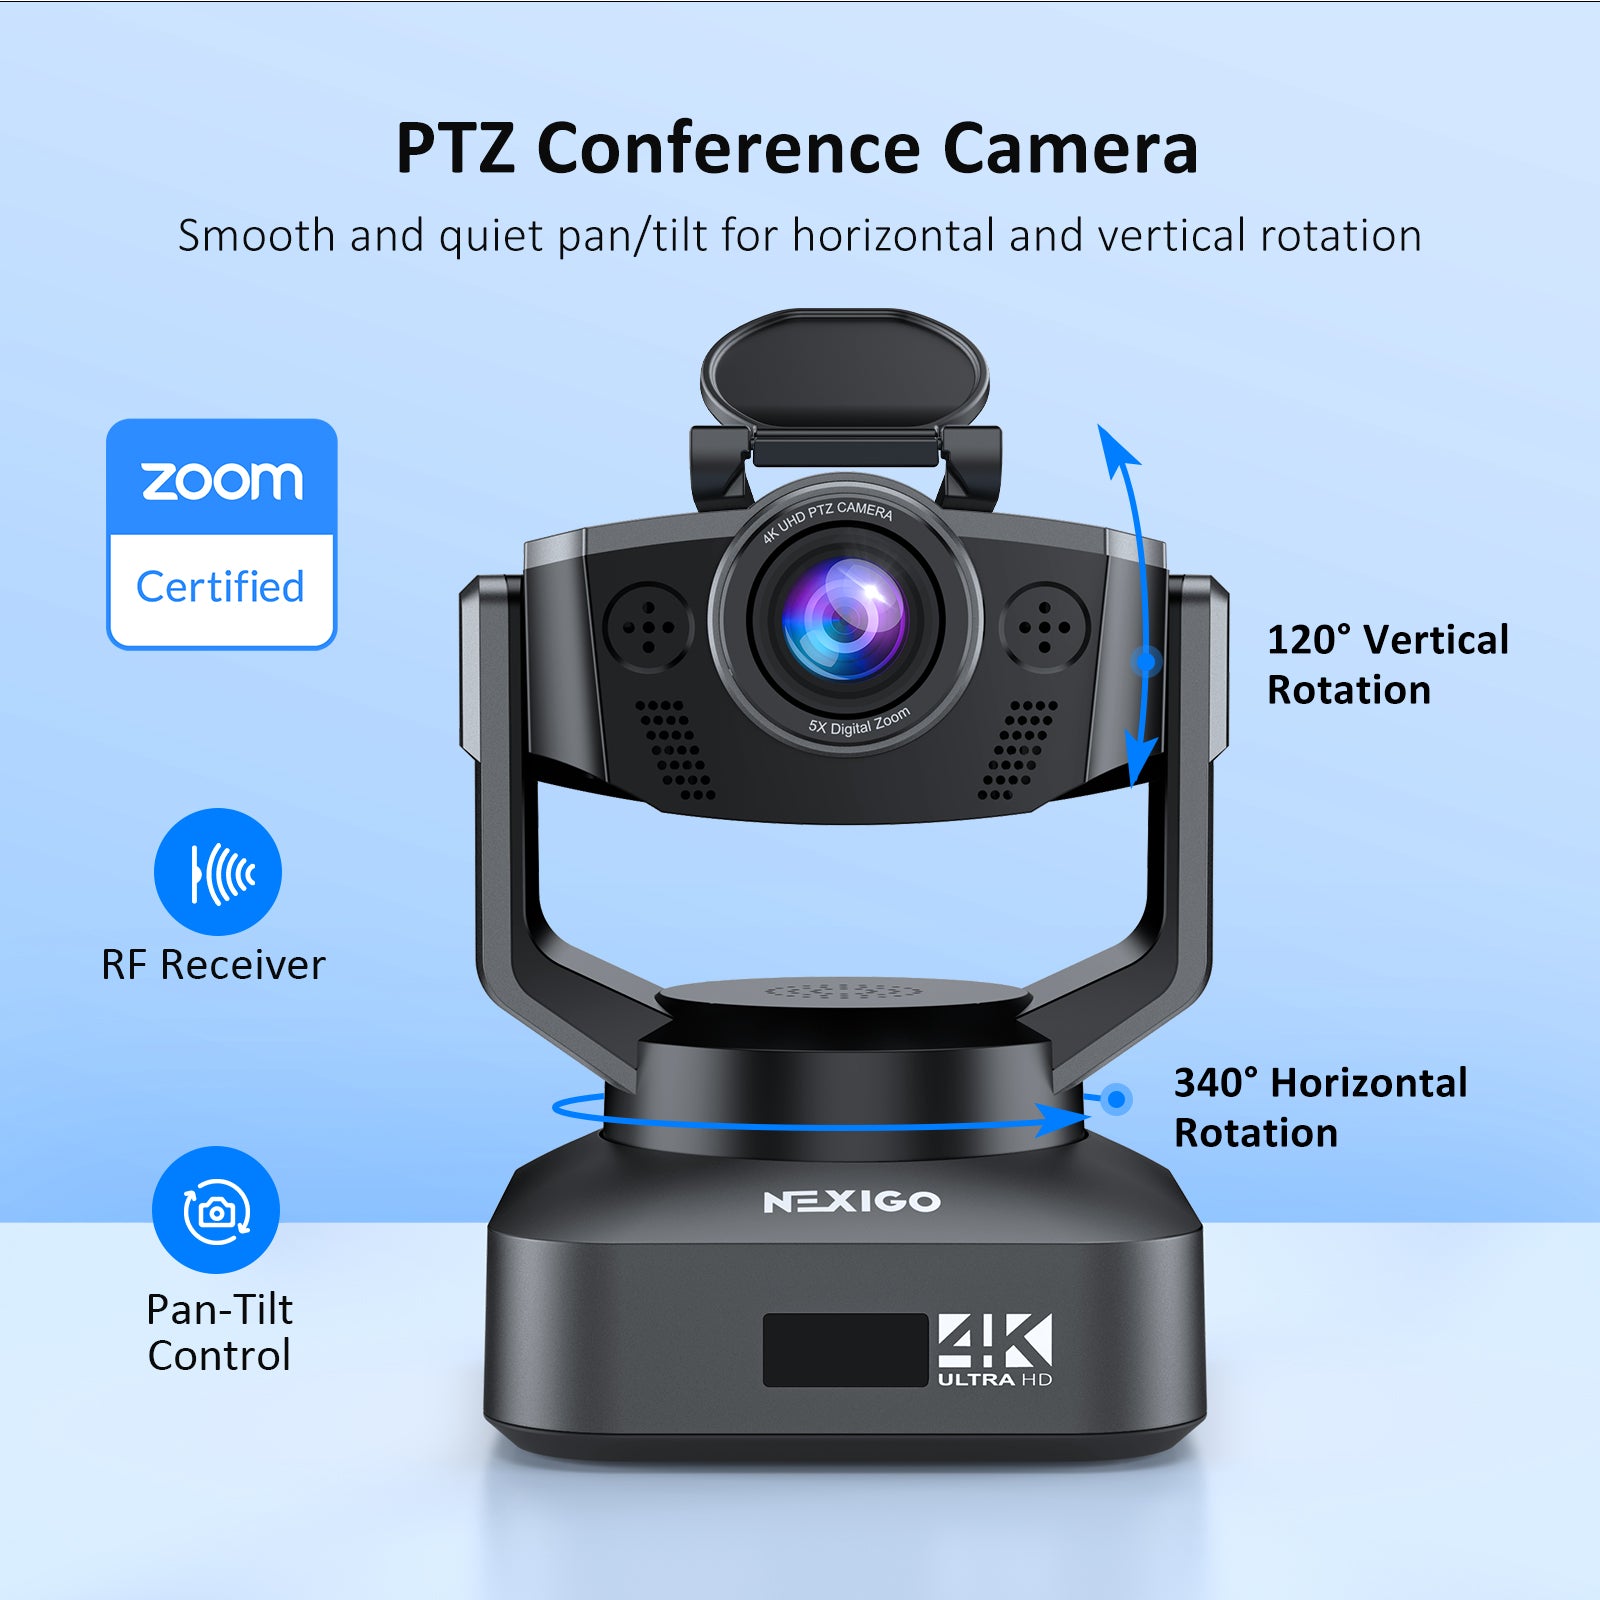 PTZ Conference Camera: 340° horizontal rotation, 115° vertical rotation with IR sensor.